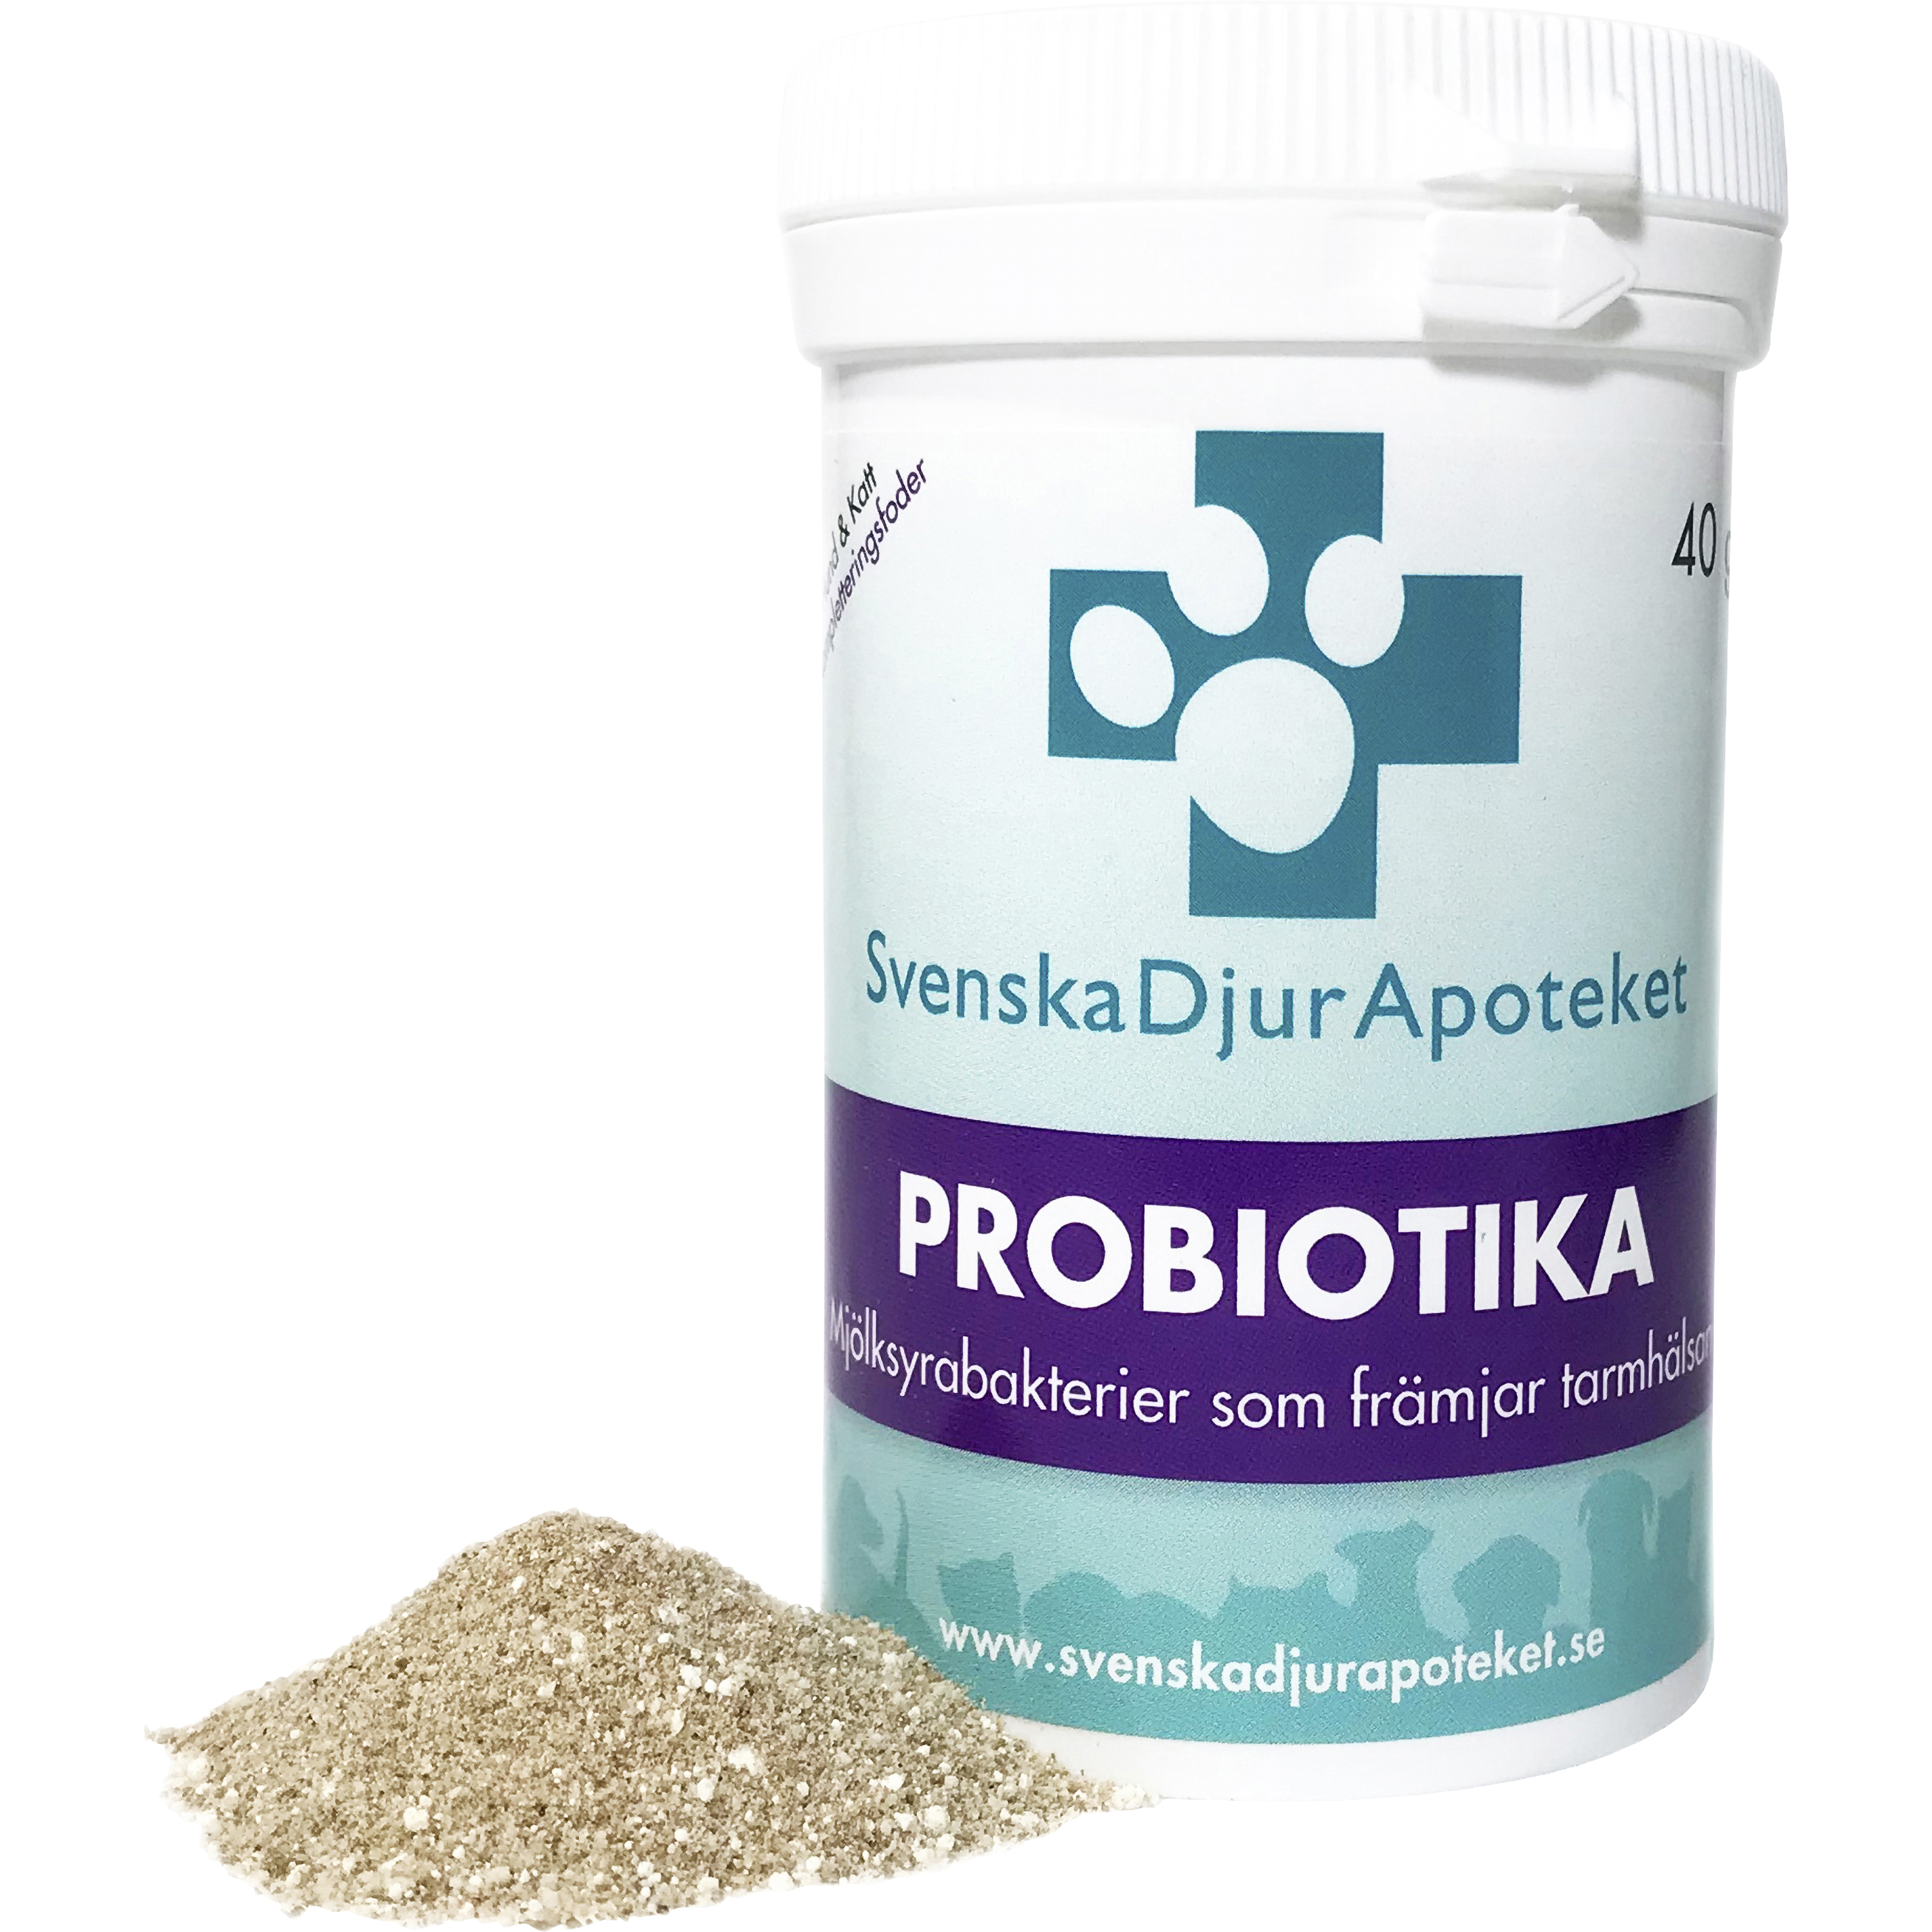 Kosttillskott Svenska DjurApoteket Probiotika 40g